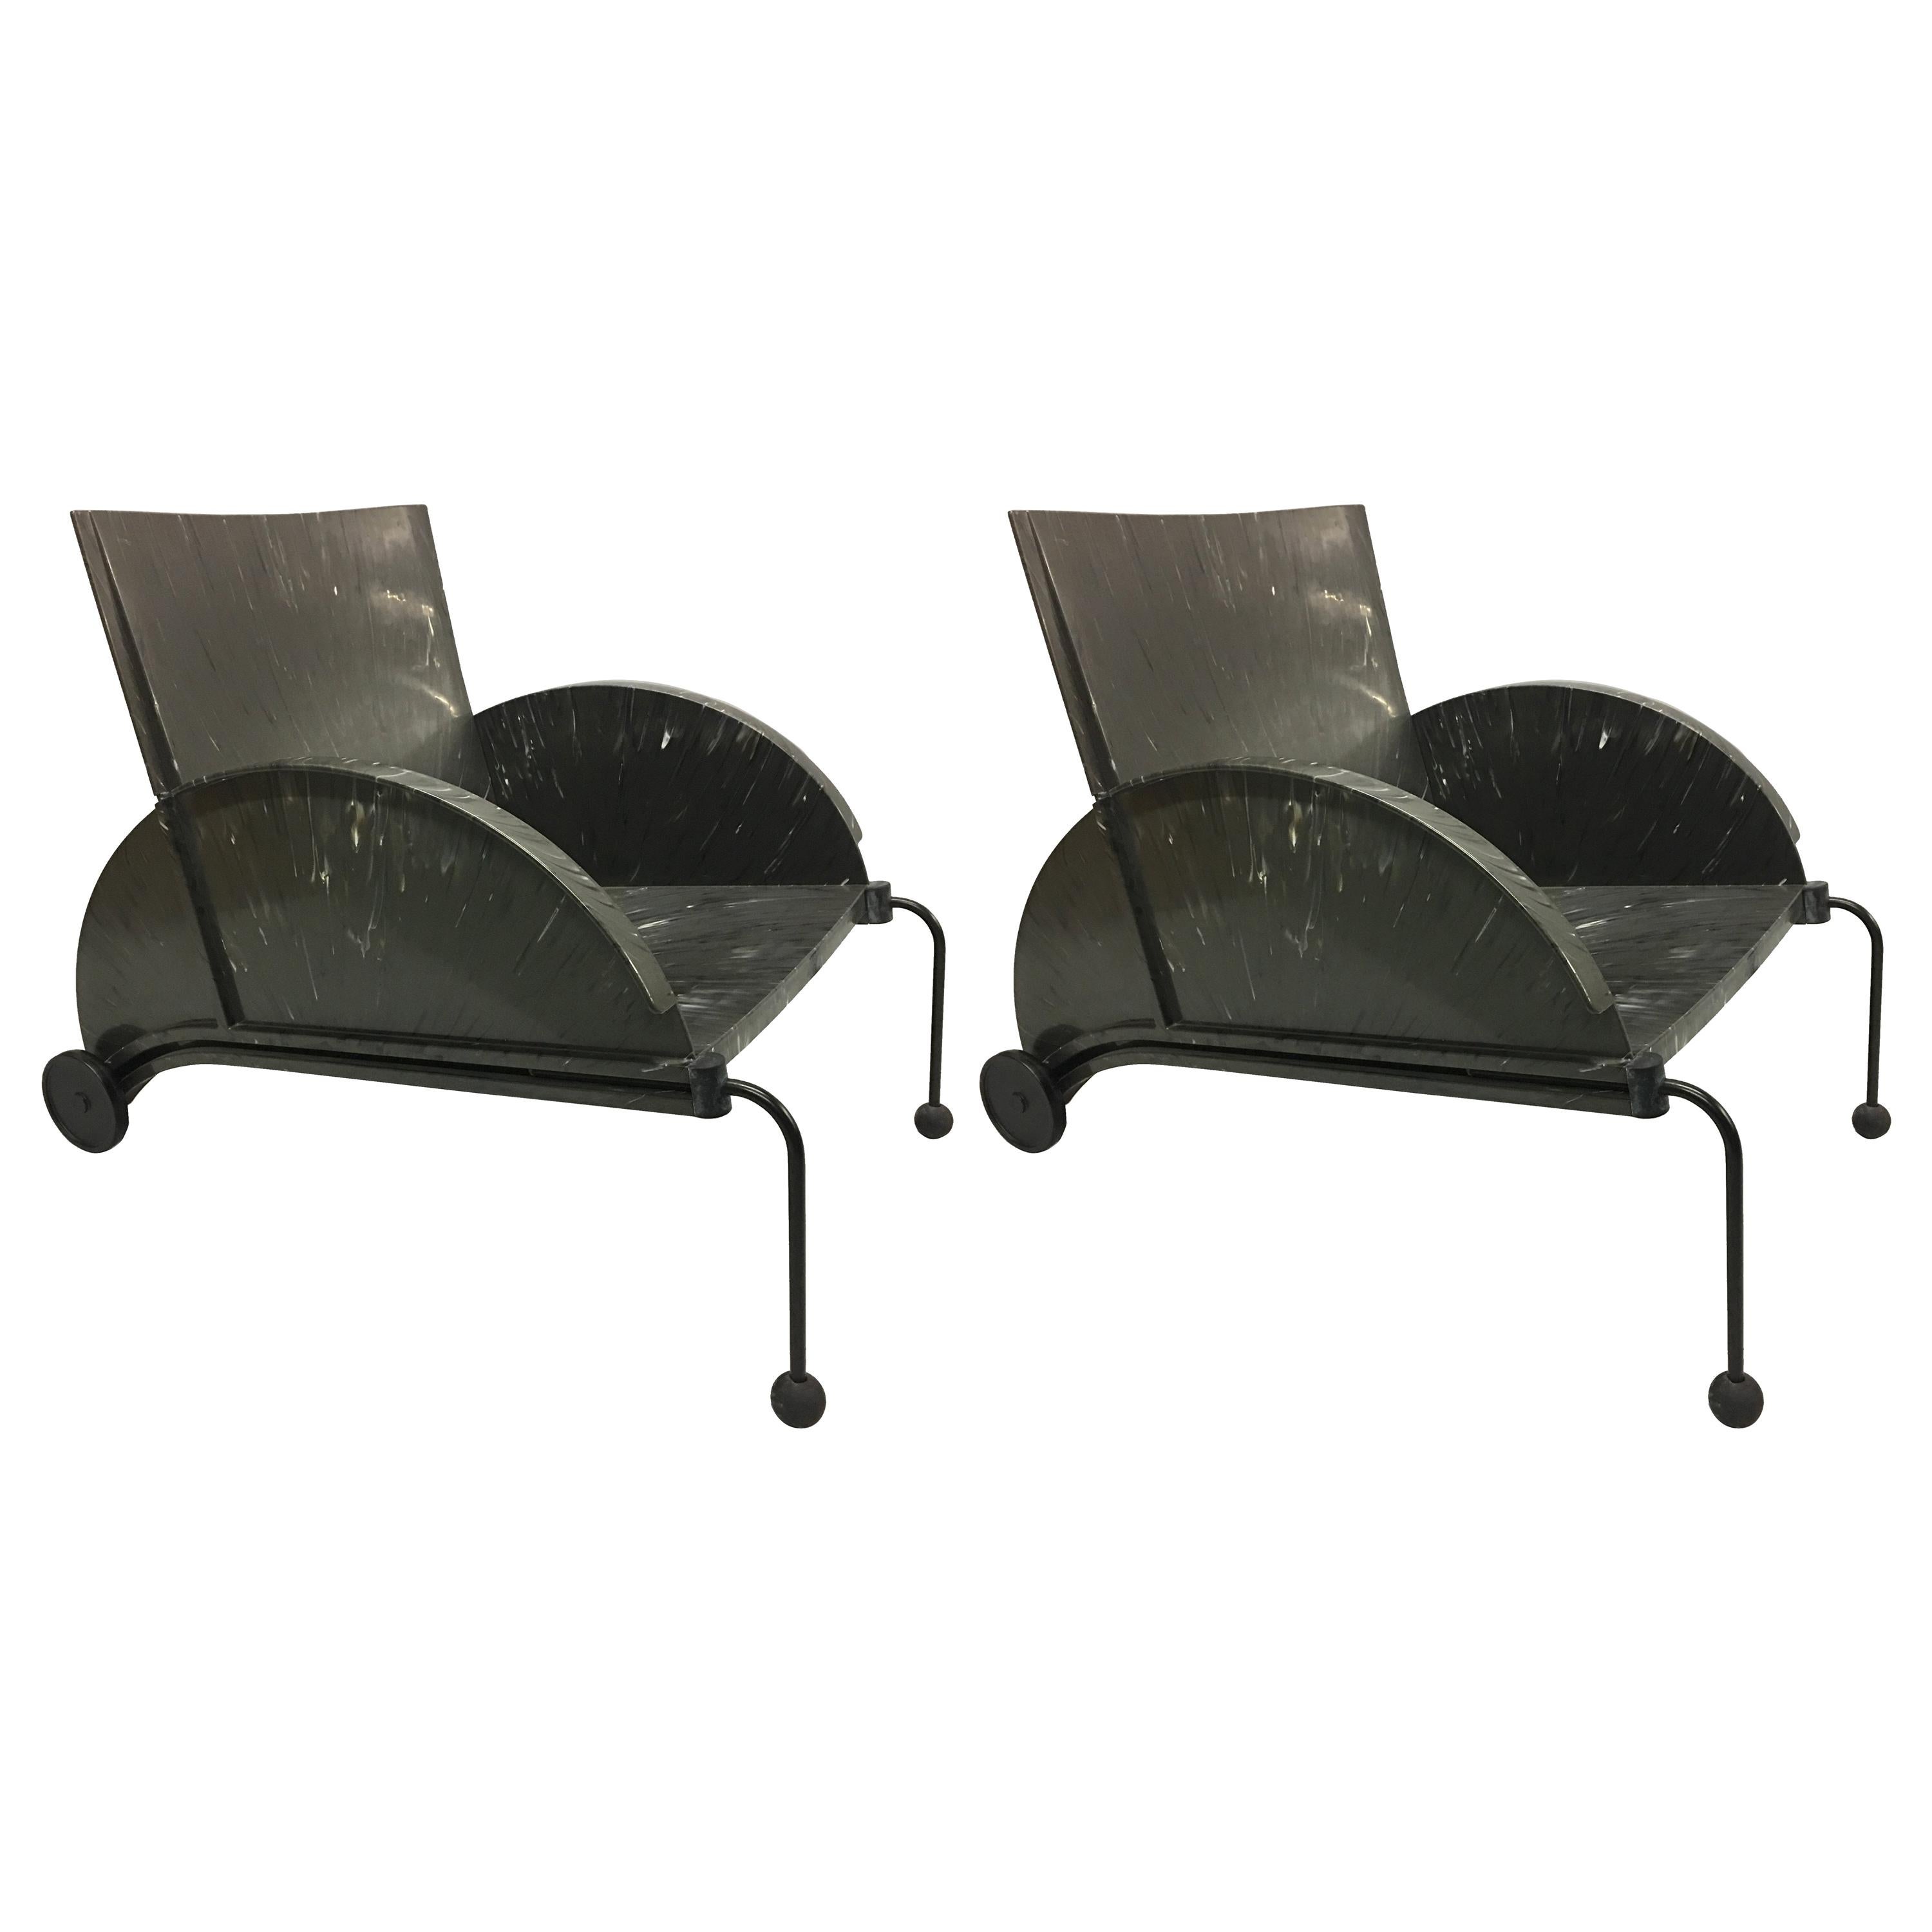 Pair of Italian 'Memphis Design' Lounge / Garden Chairs by Castelli Ferrieri